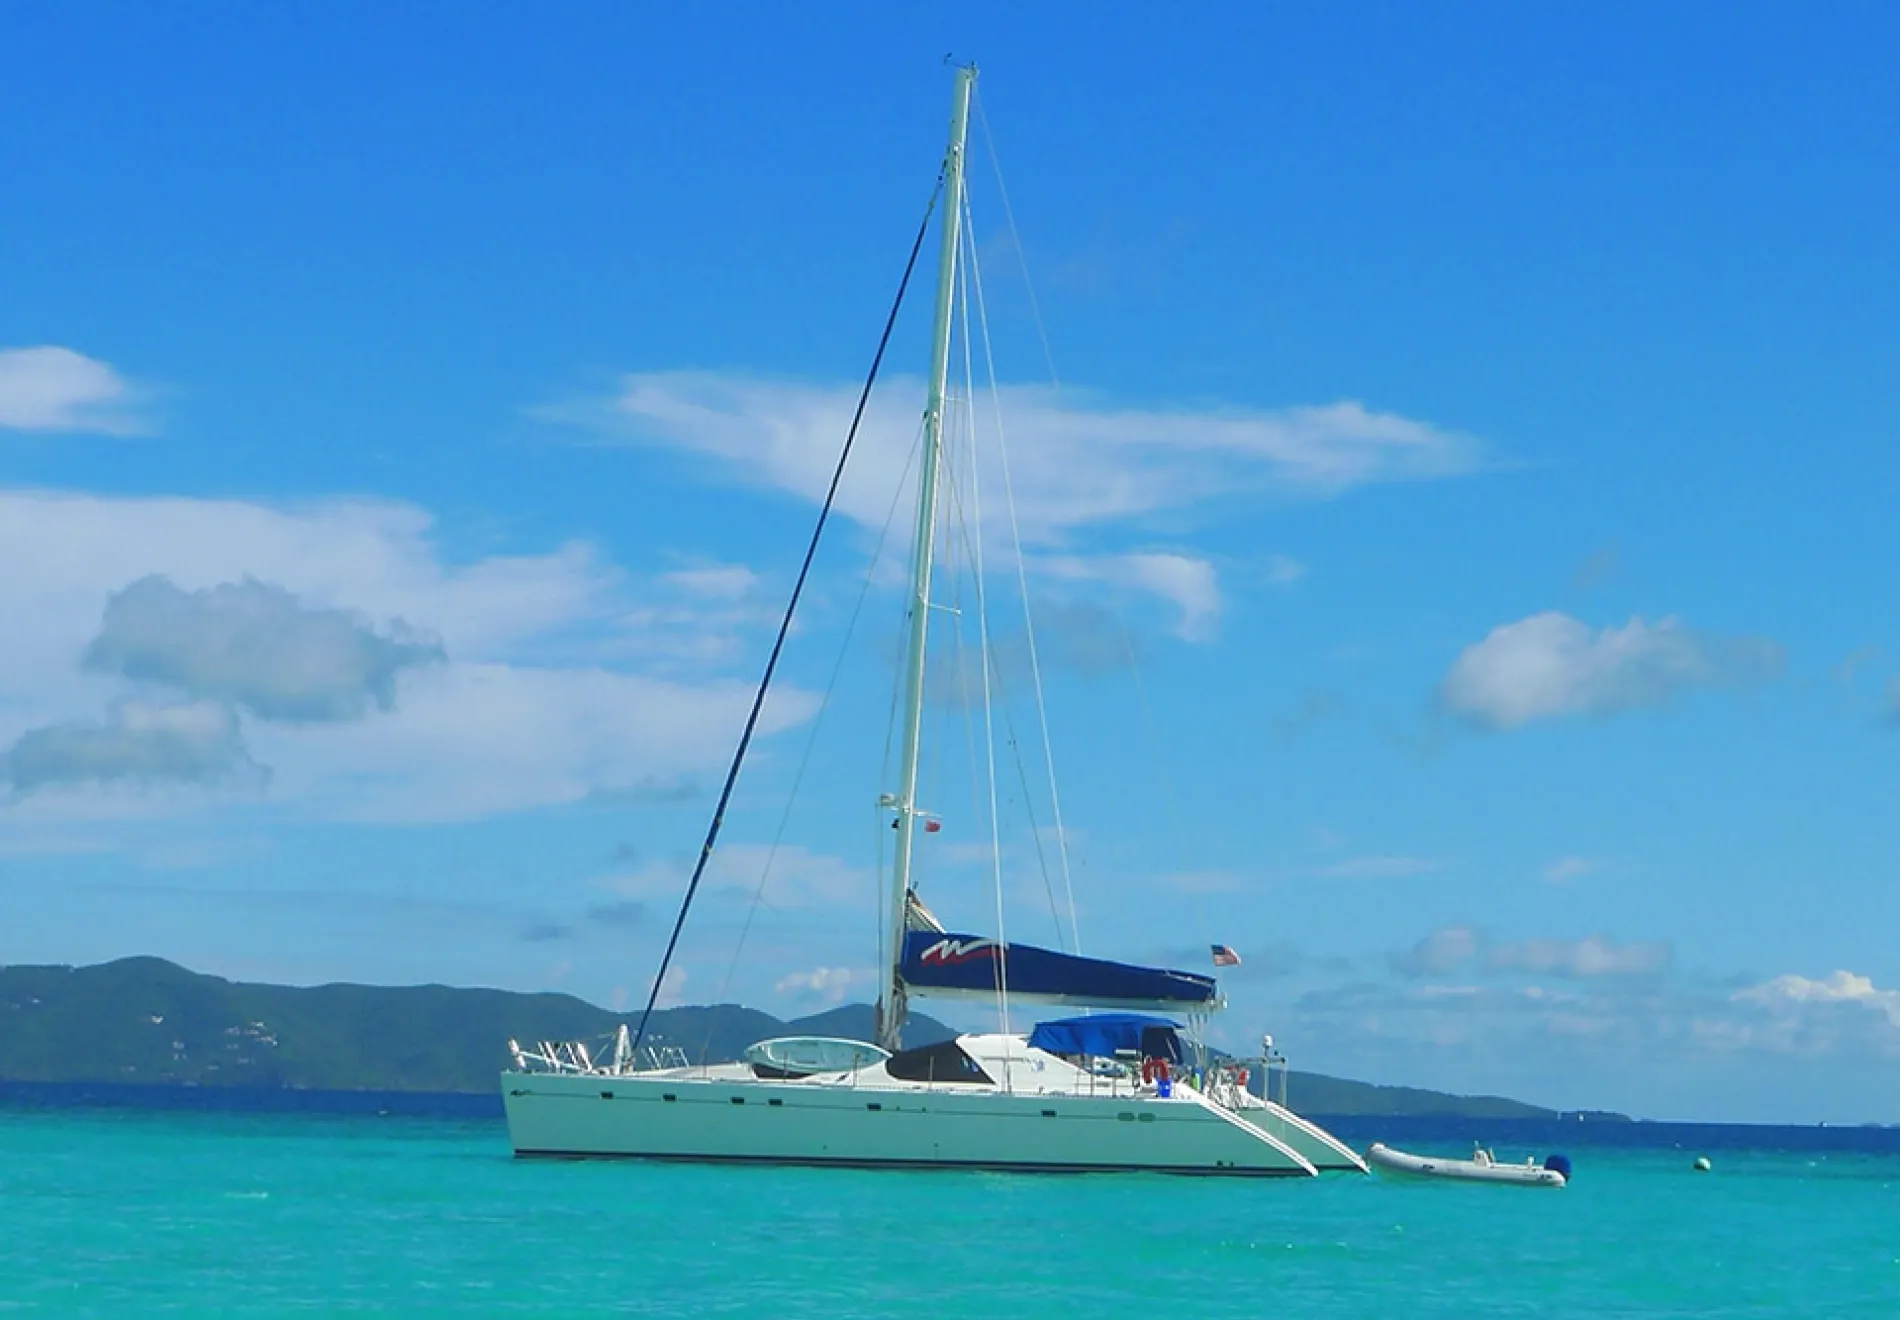 The-Moorings-charter-yacht-near-Tortola-British-Virgin-Islands